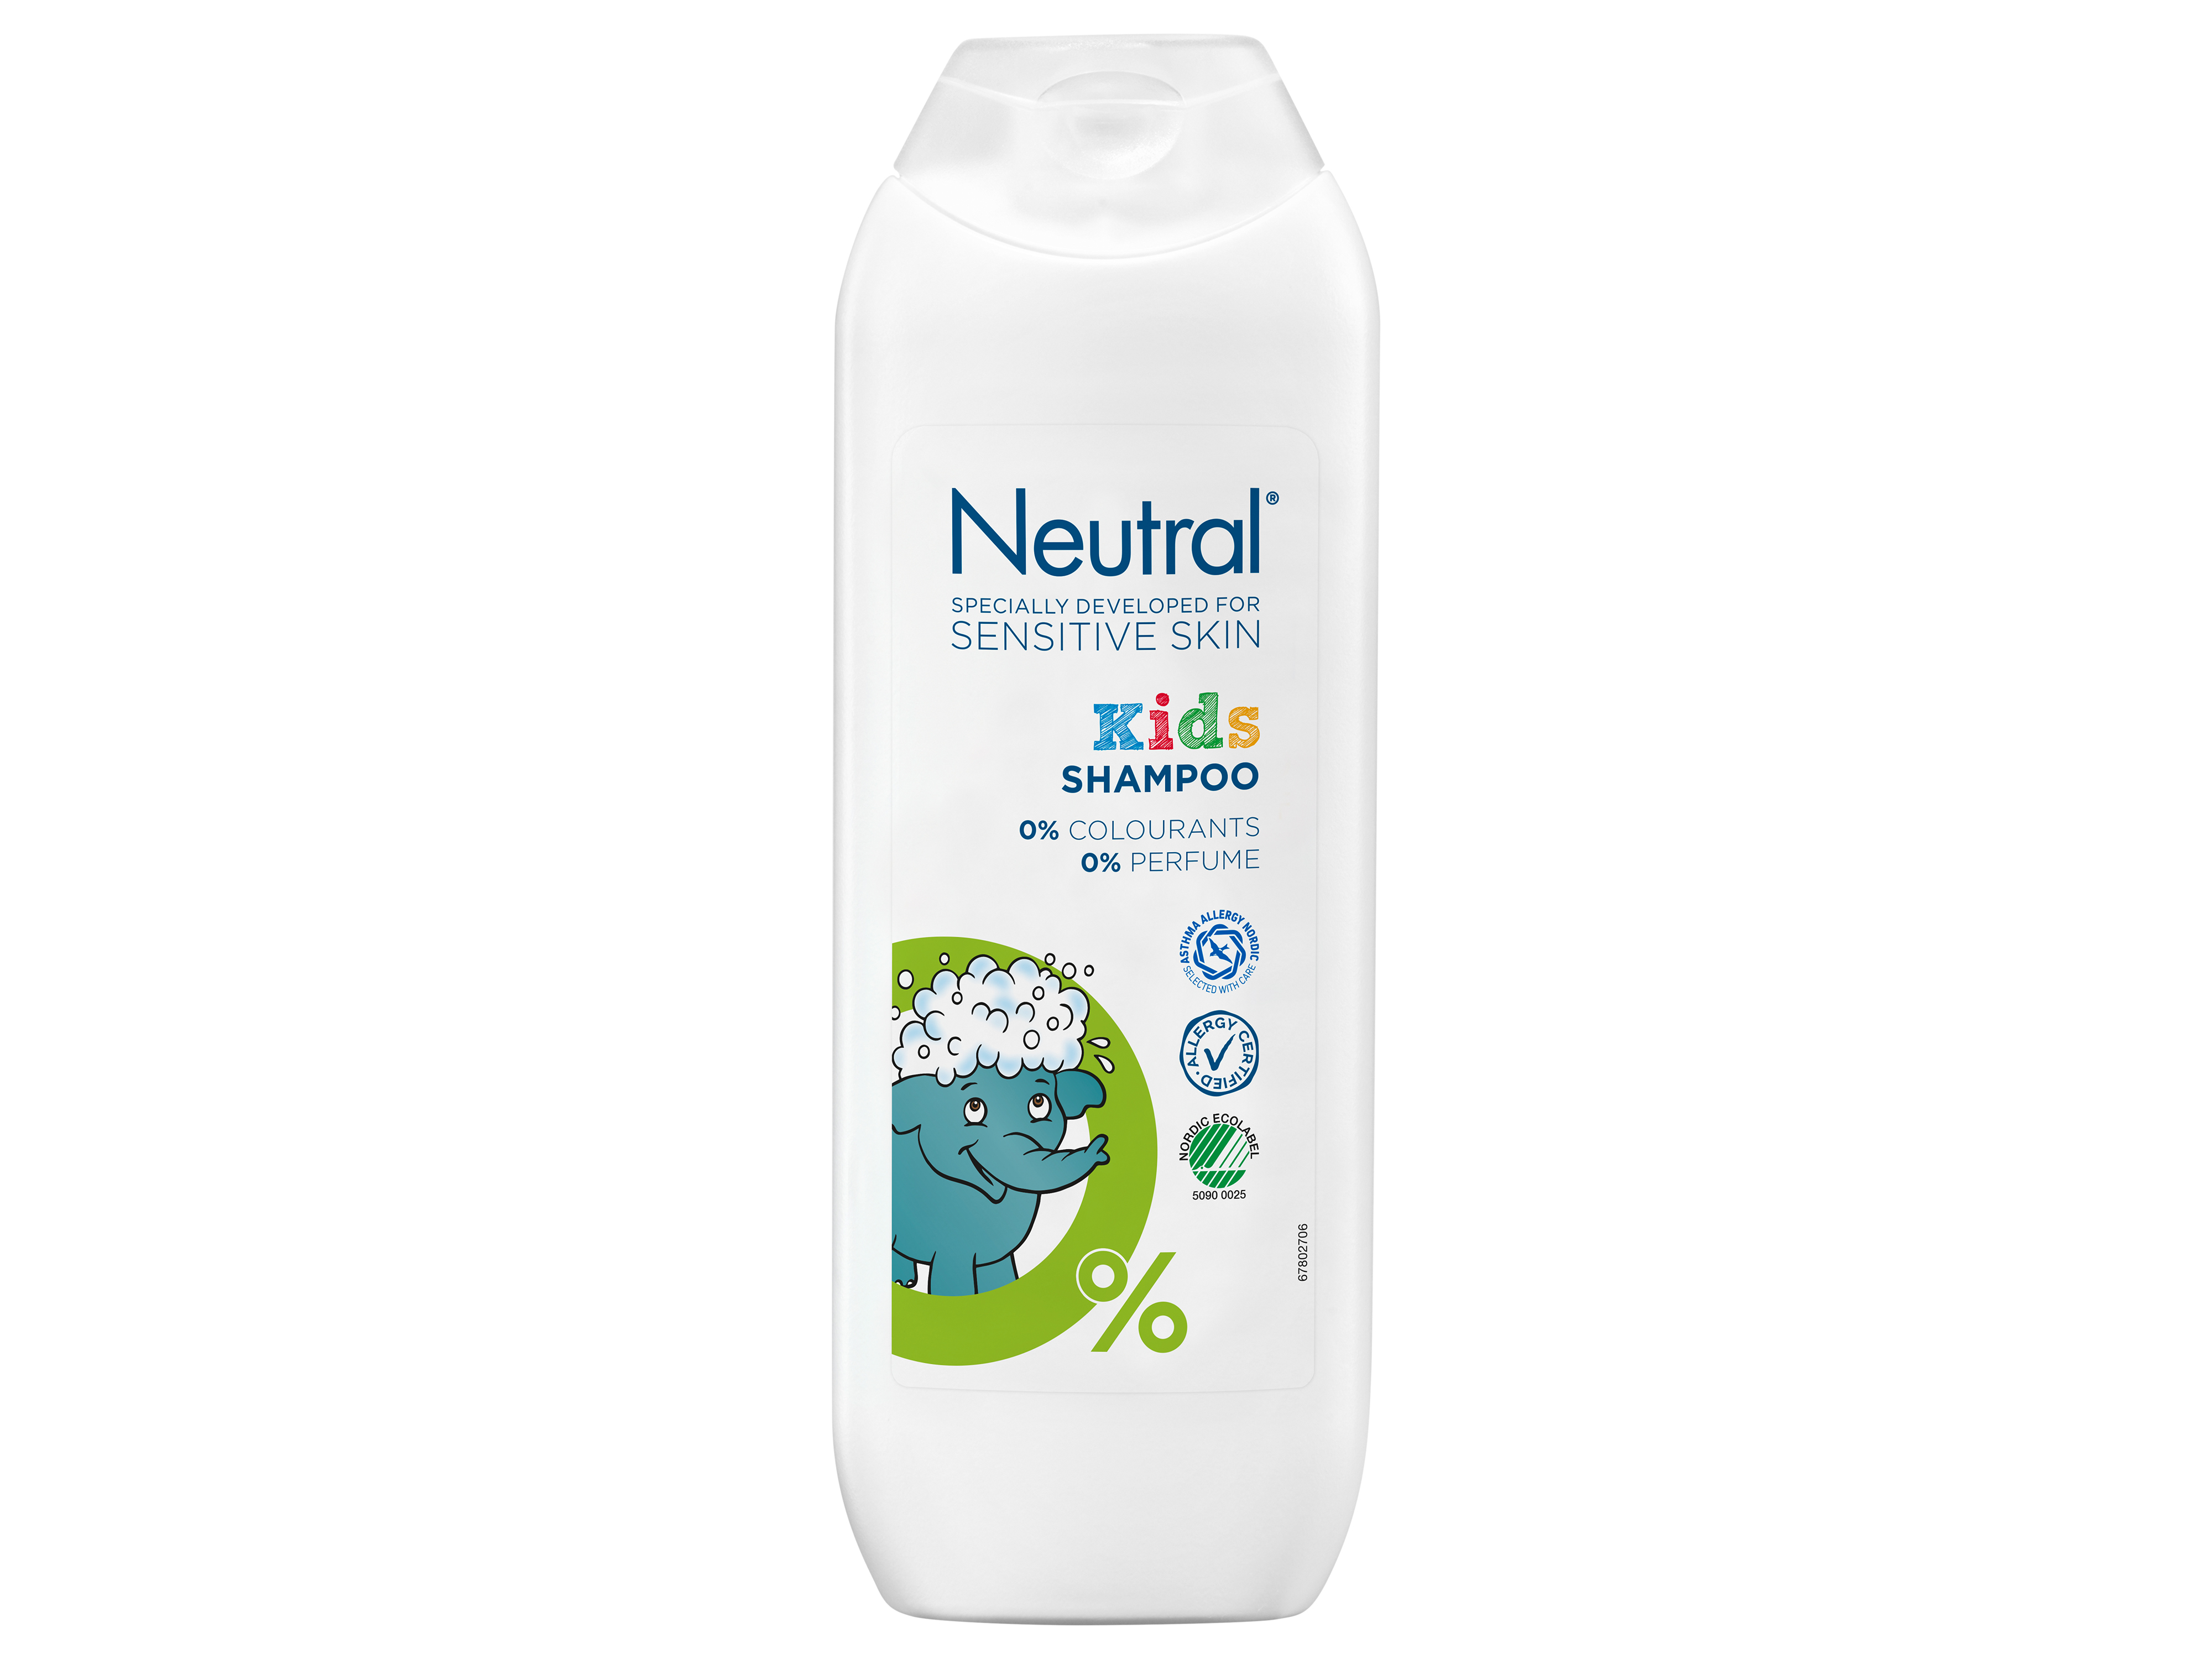 Neutral Kids Shampoo, Sjampo til barn, 250 ml